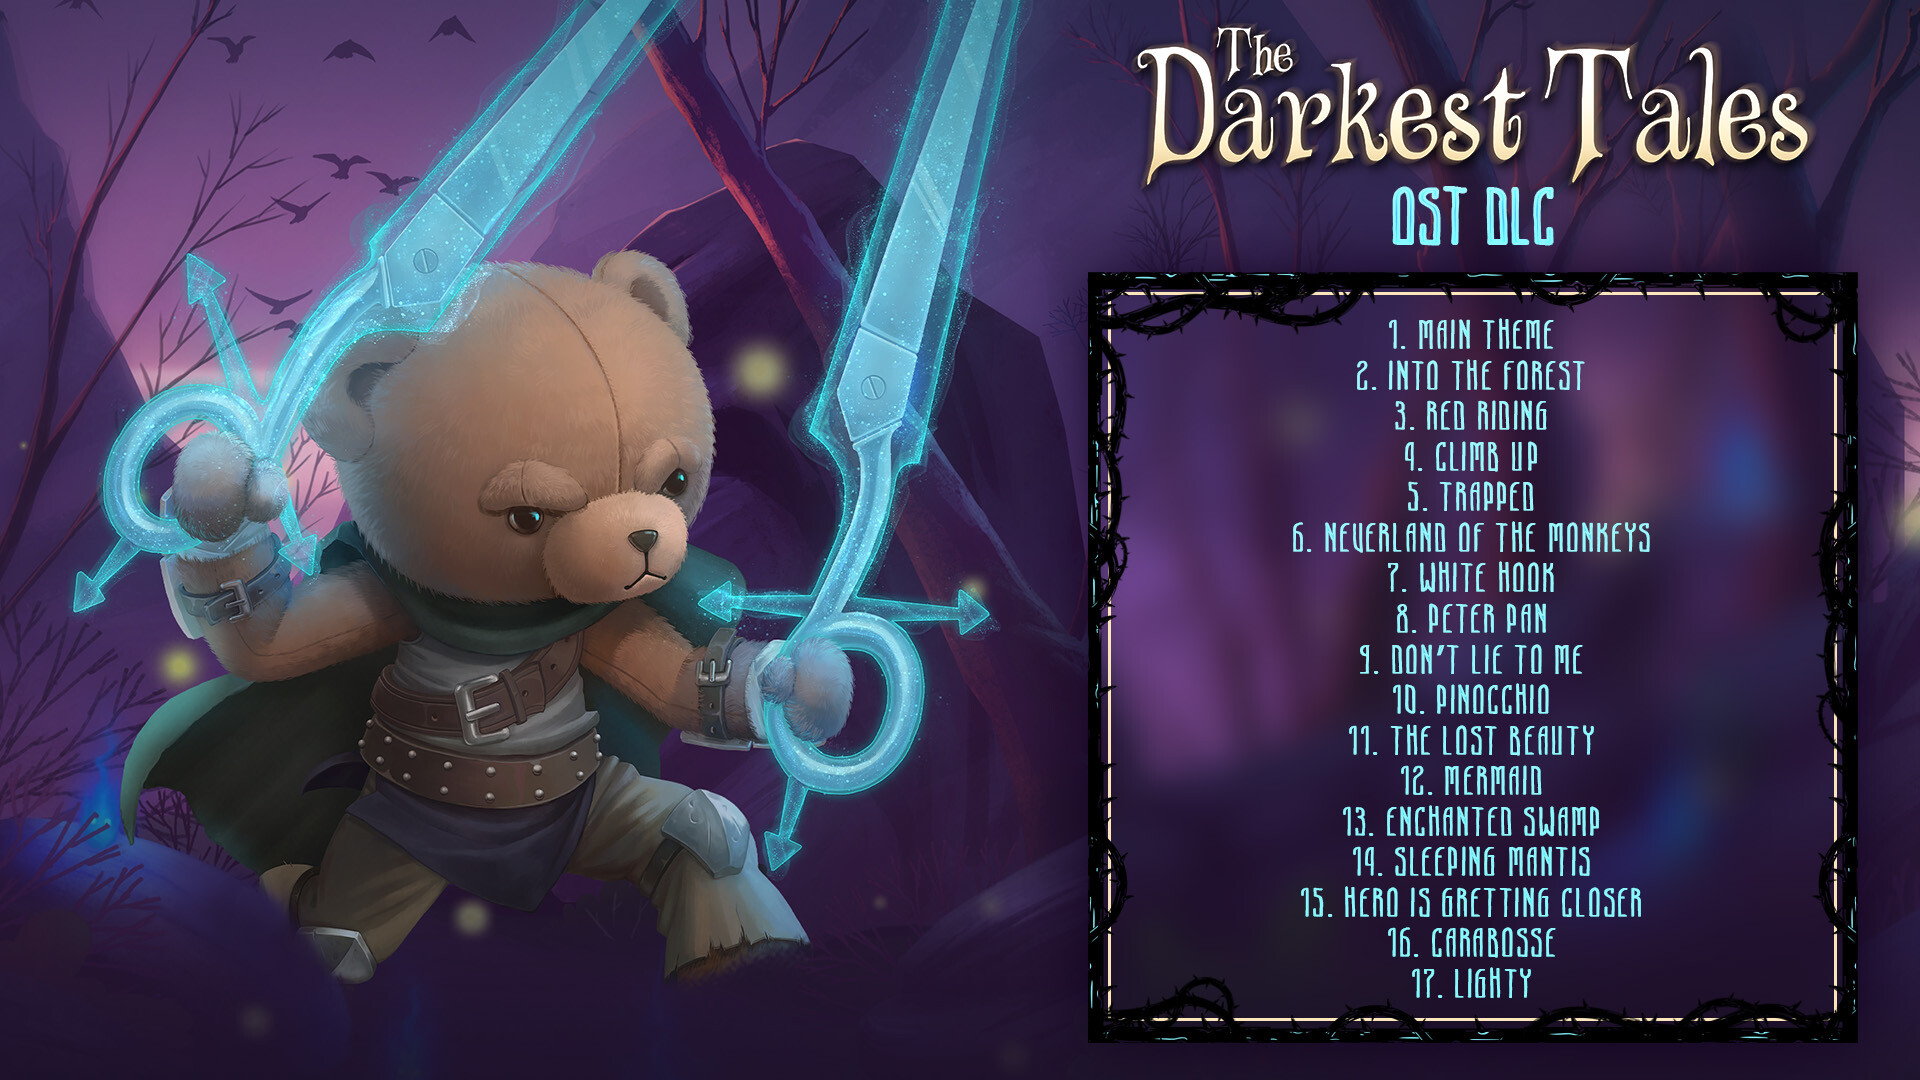 The Darkest Tales — OST DLC on Steam